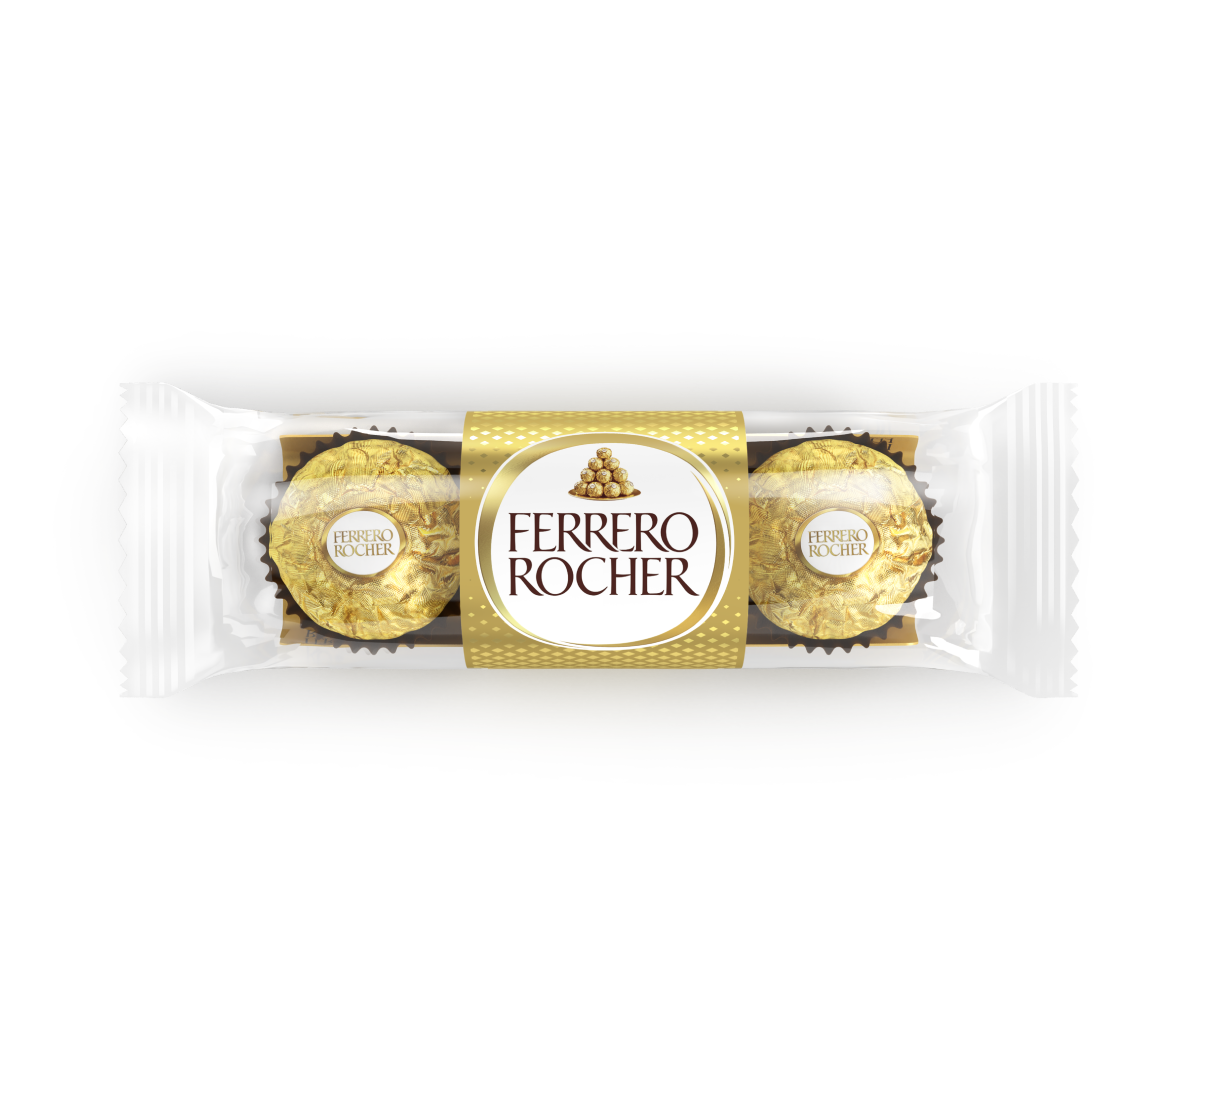 Ferrero Rocher 3 pieces